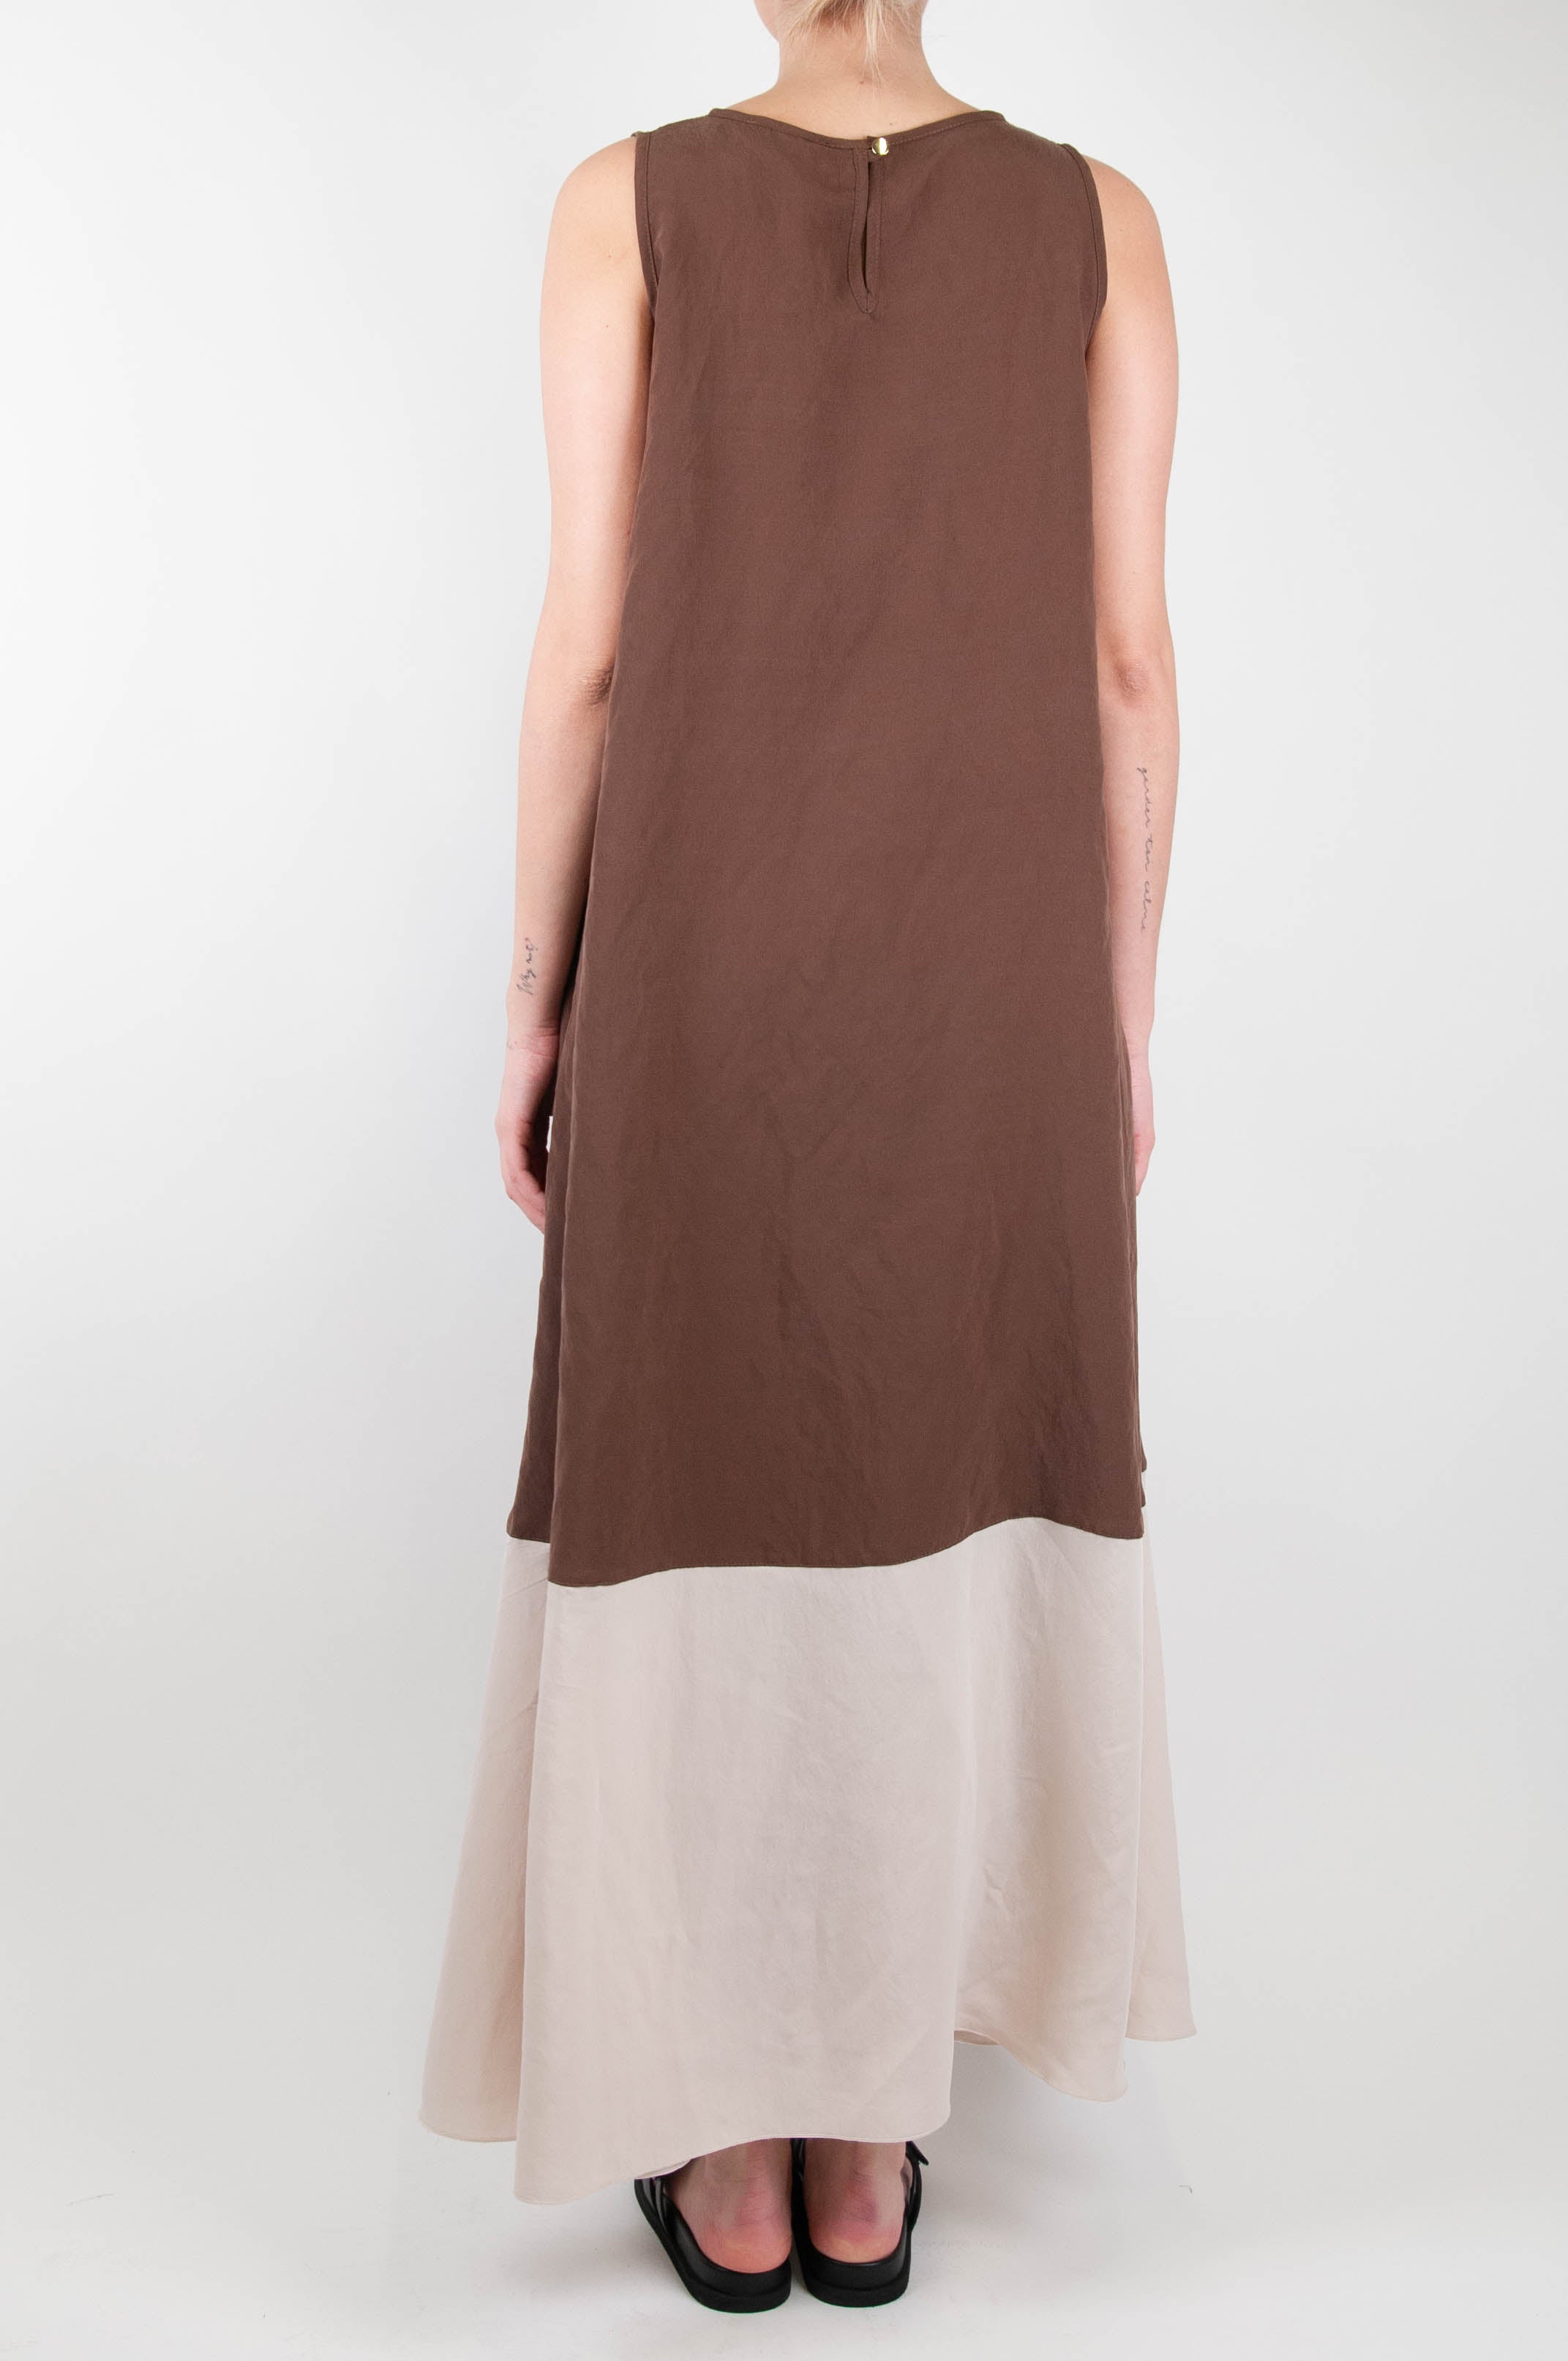 Motel - Long sleeveless dress with contrasting bottom